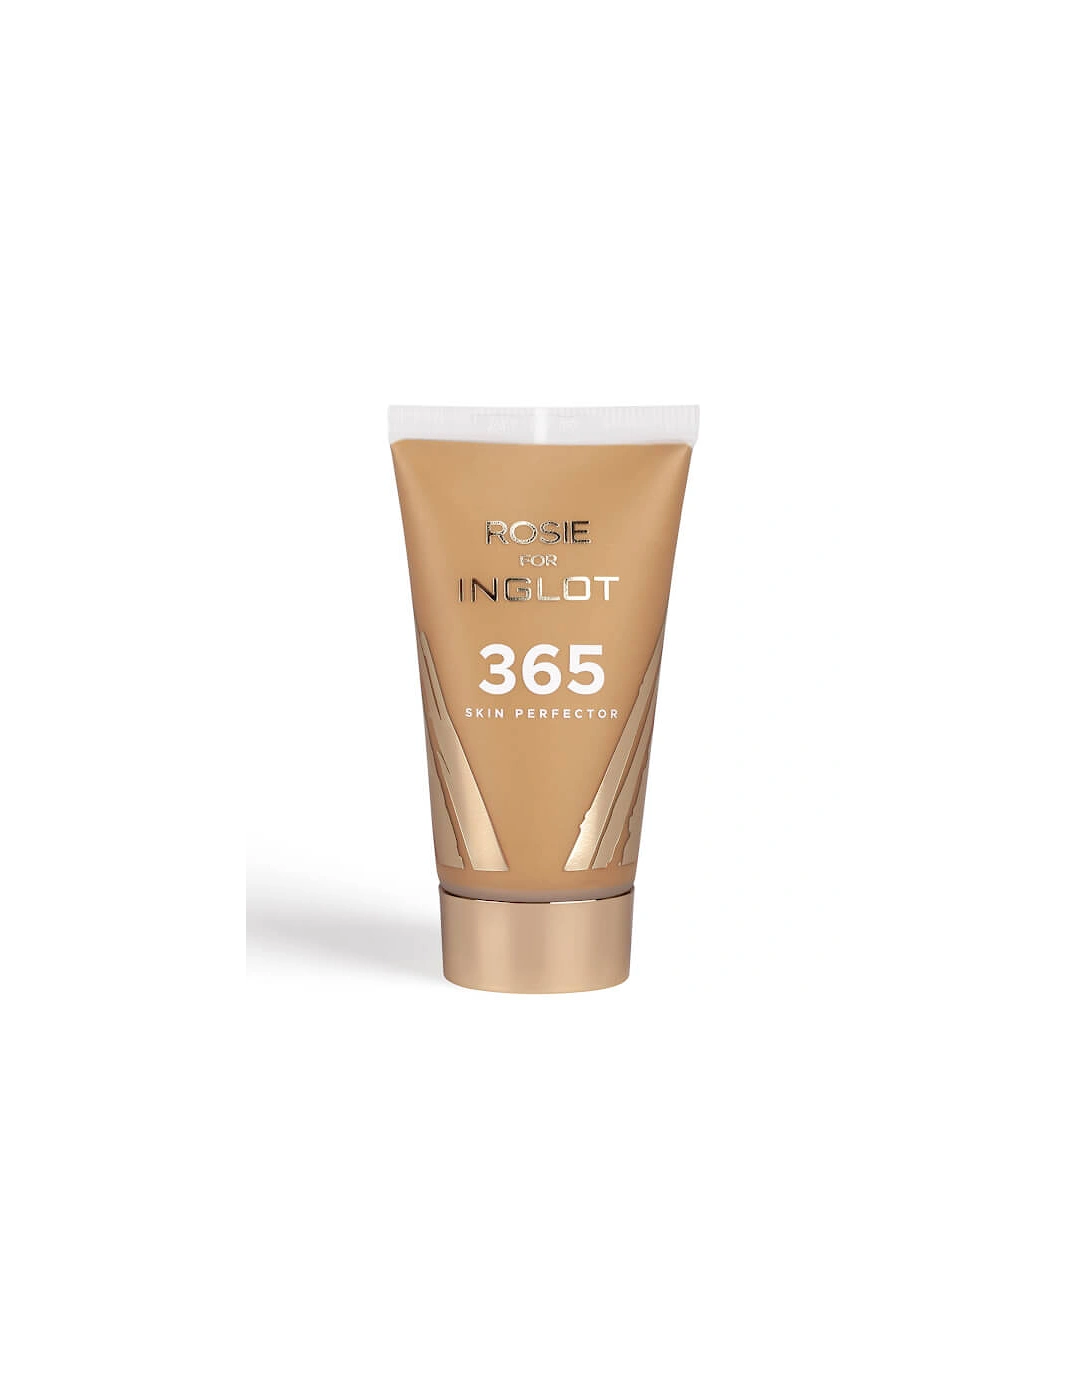 Rosie for 365 Skin Perfector - Chocolate Bronze